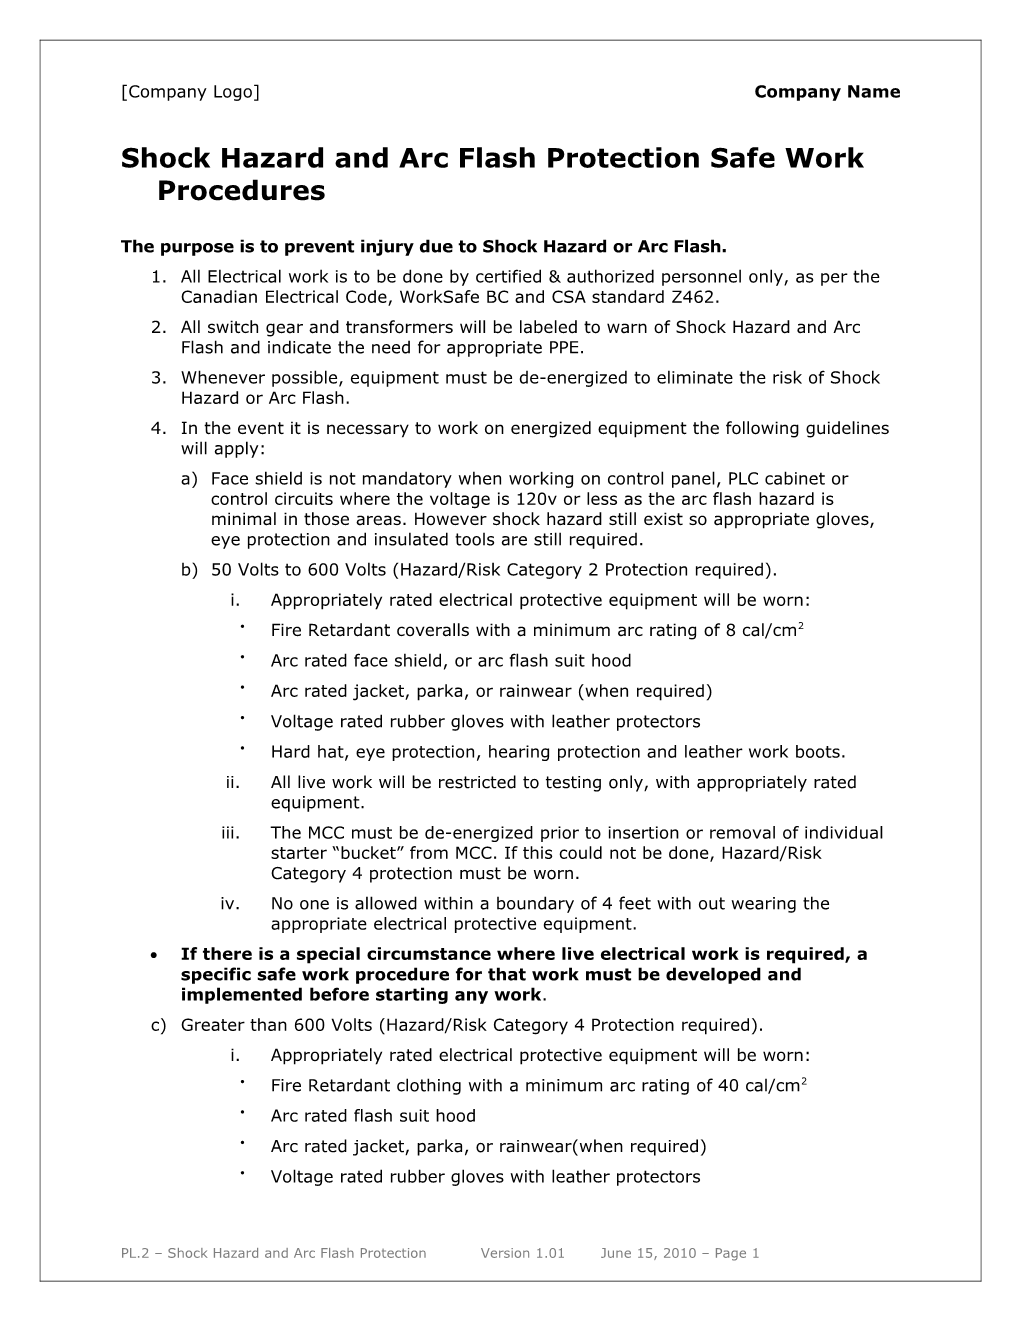 Shock Hazard and Arc Flash Protection Safe Work Procedures